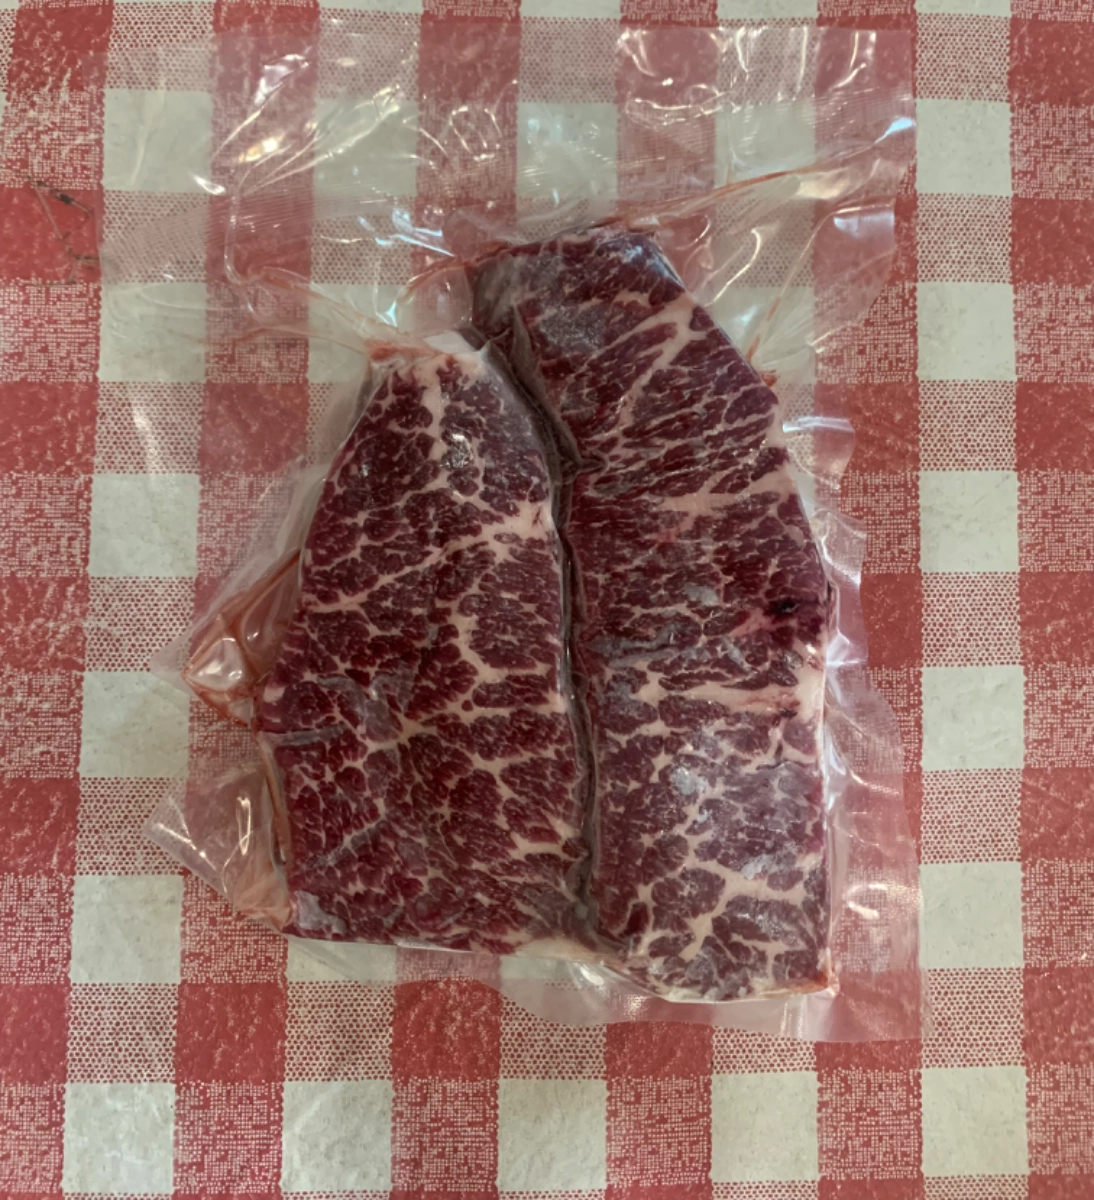 beef-dry-aged-denver-steak-9-oz-package